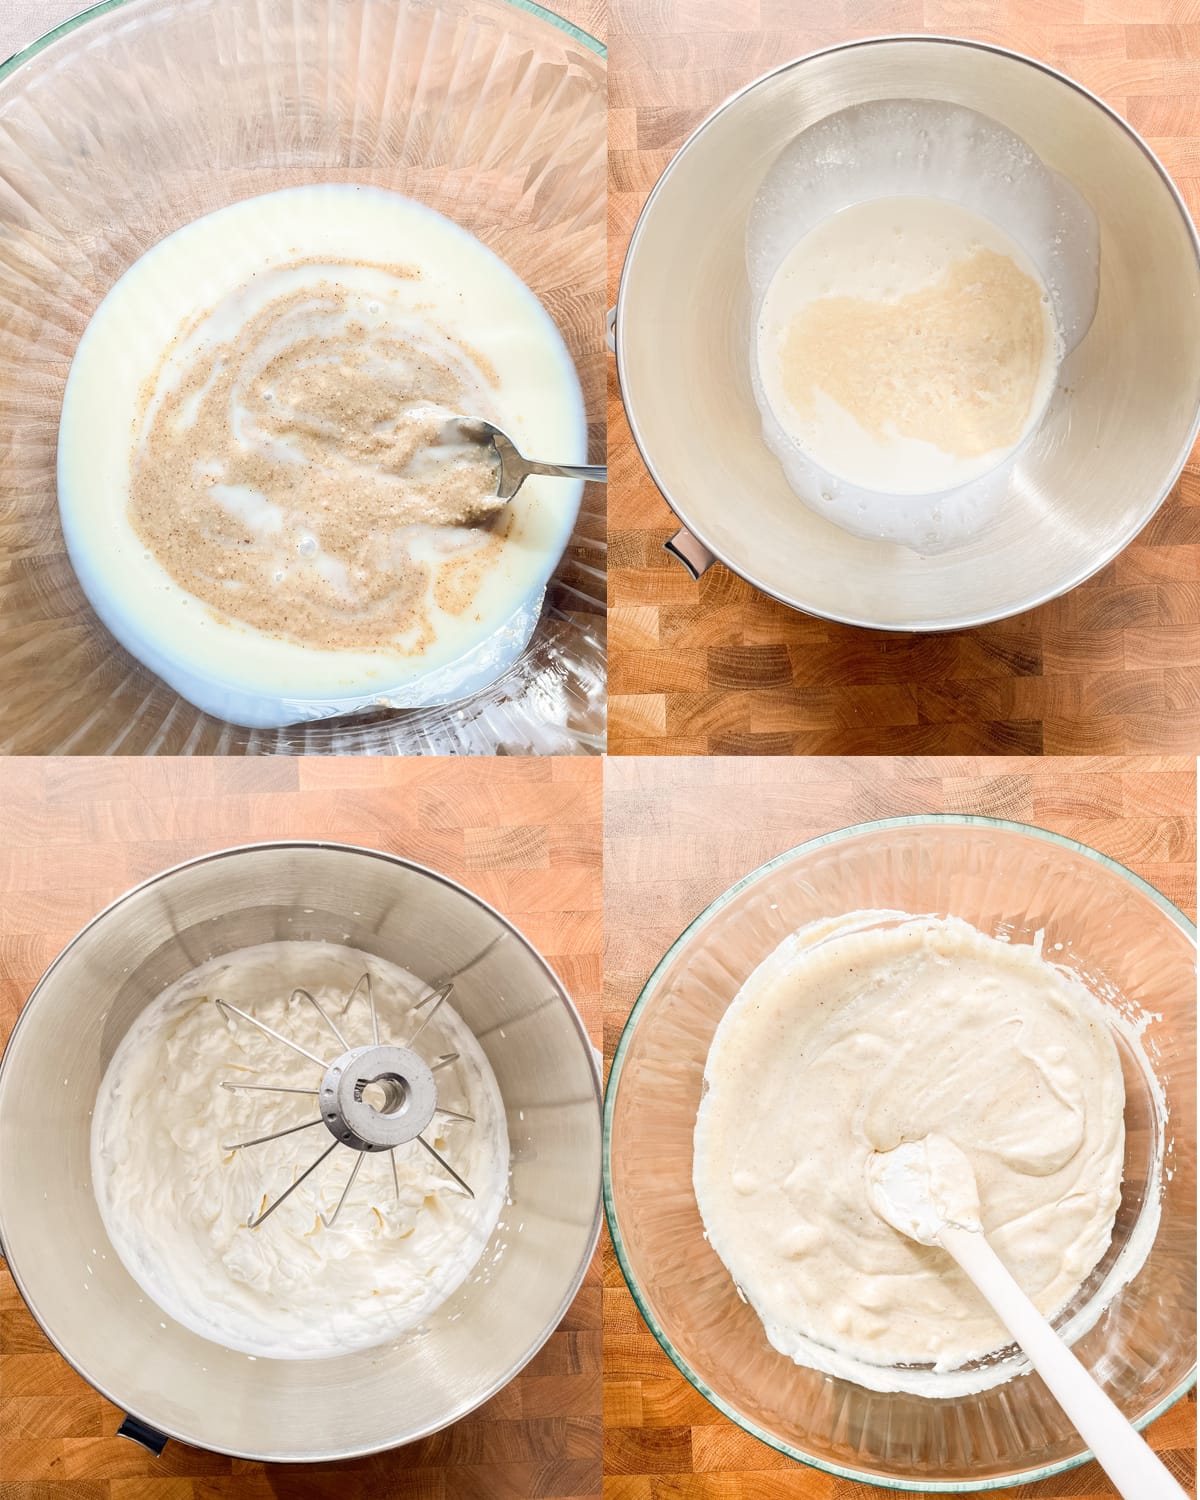 Process of mixing and making hazelnut no churn ice cream.